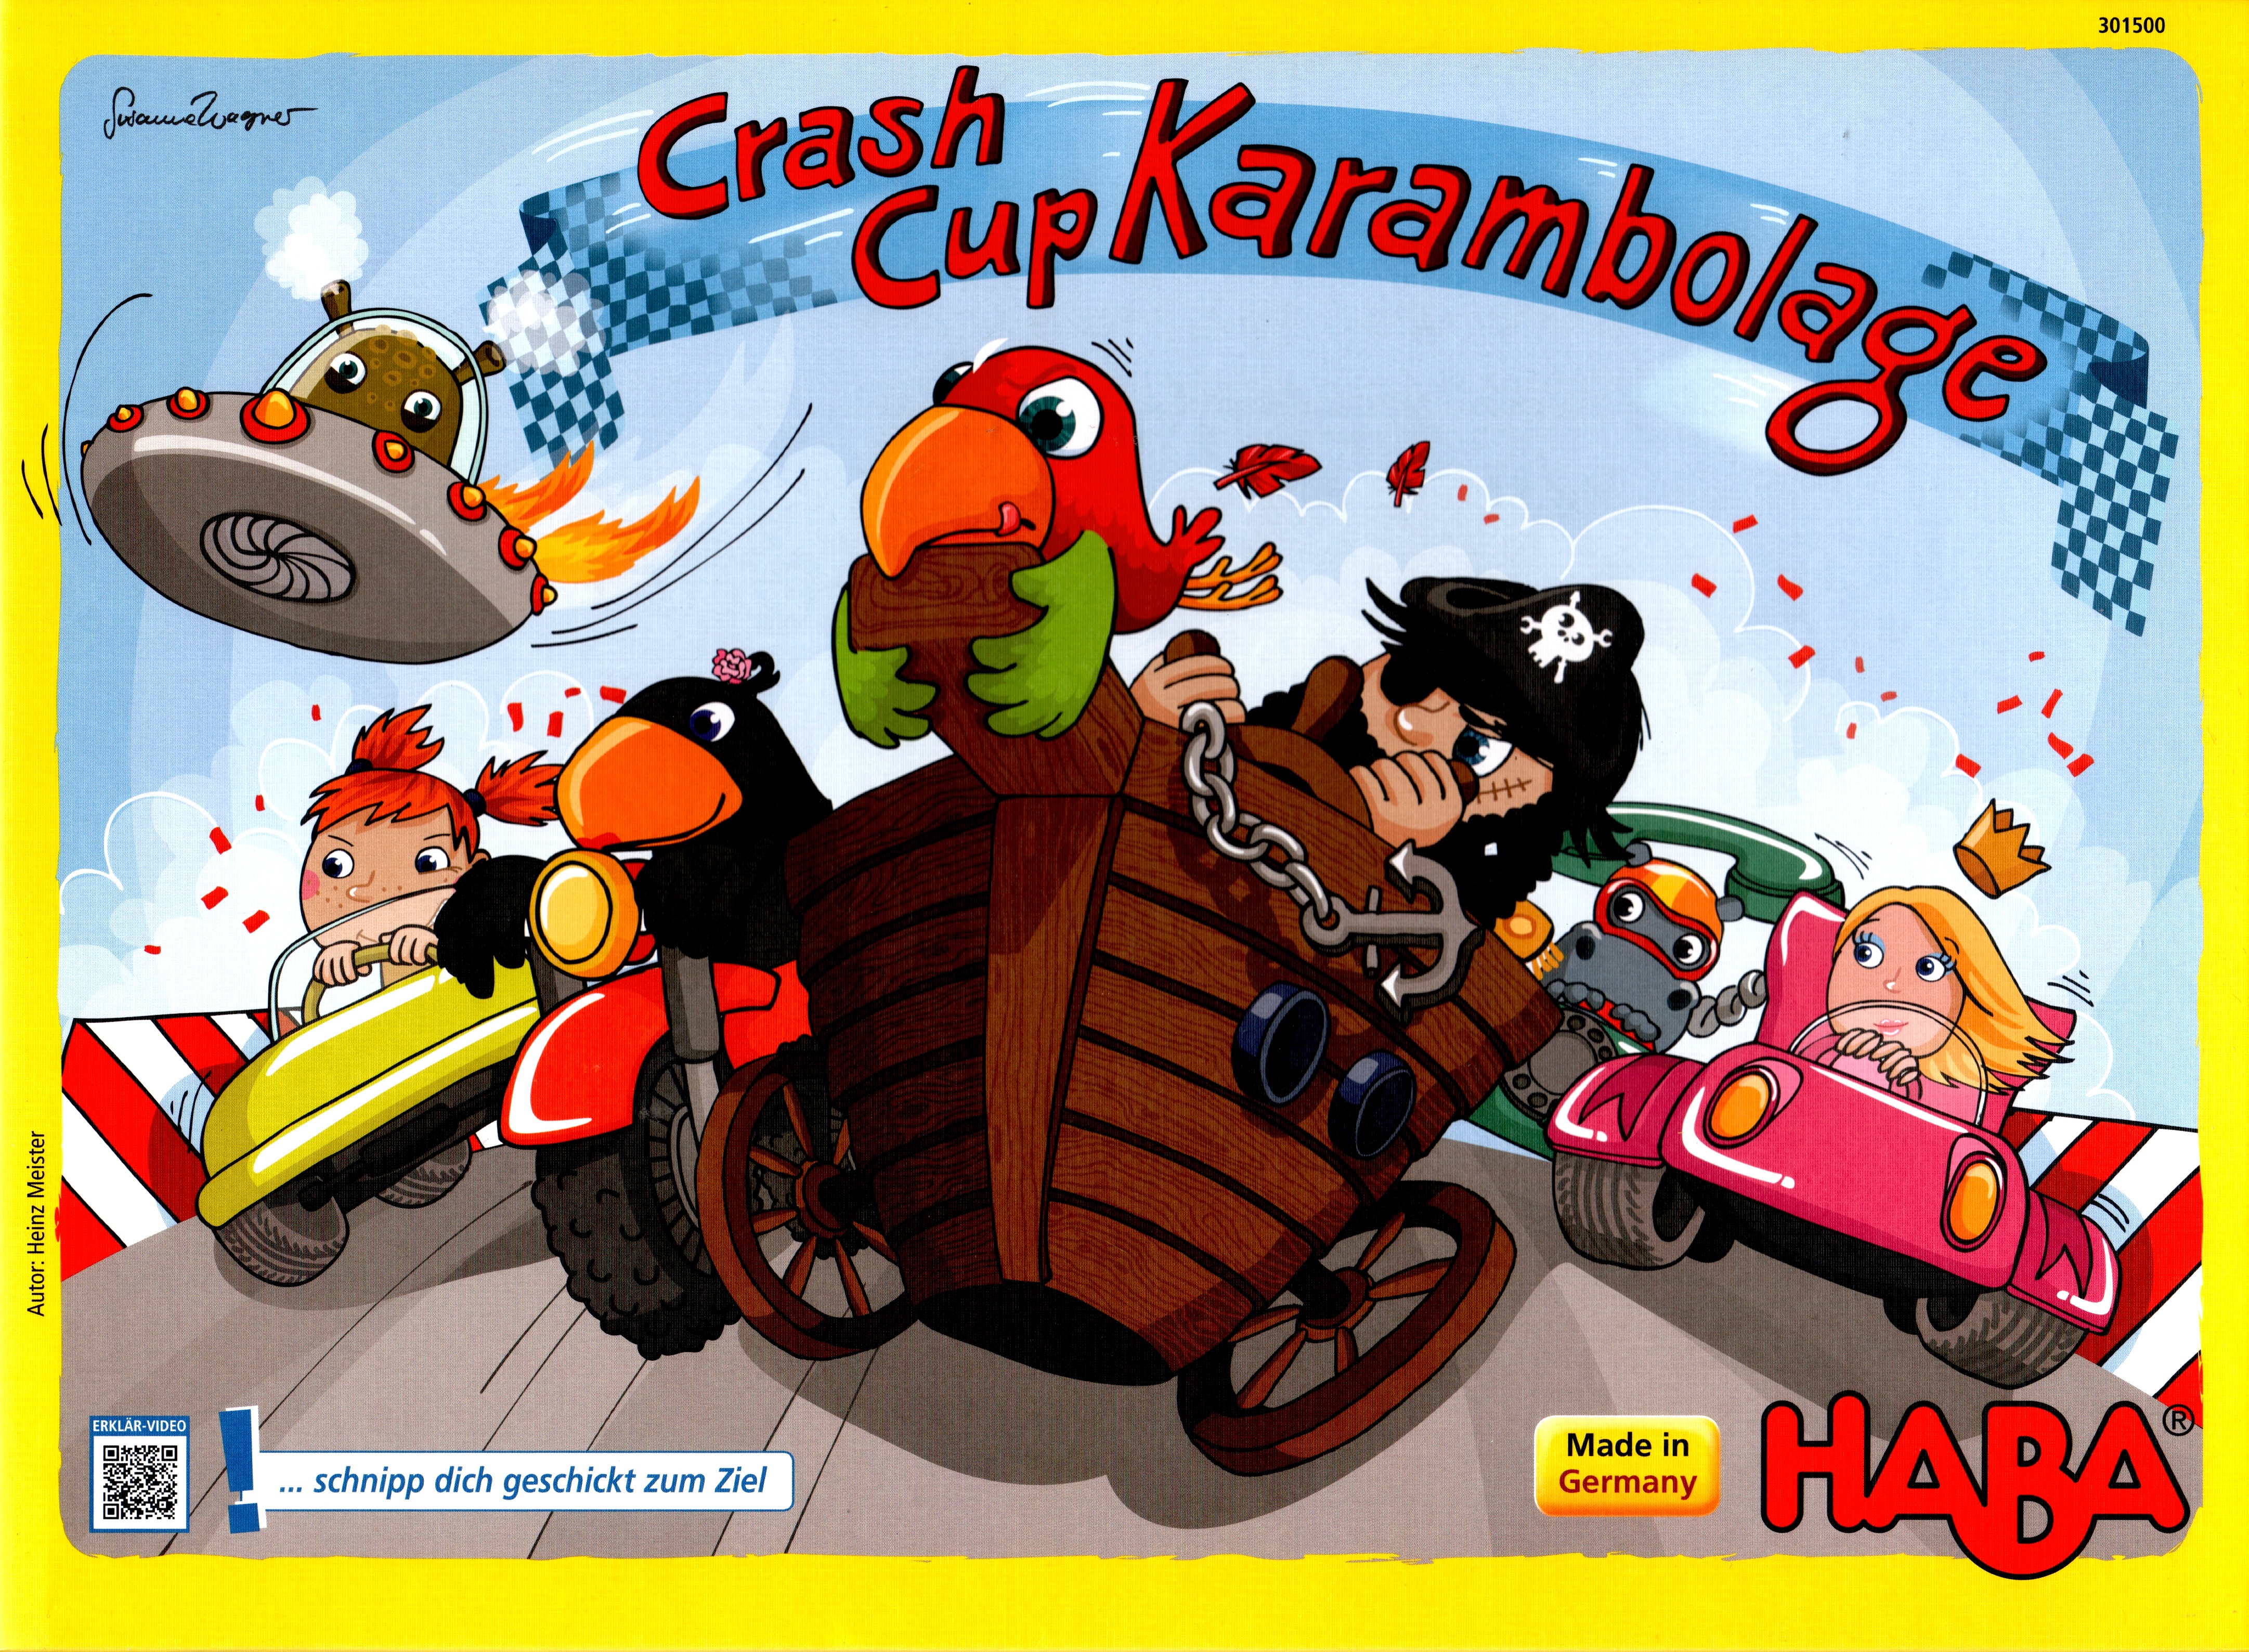 Crash Cup Karambolage